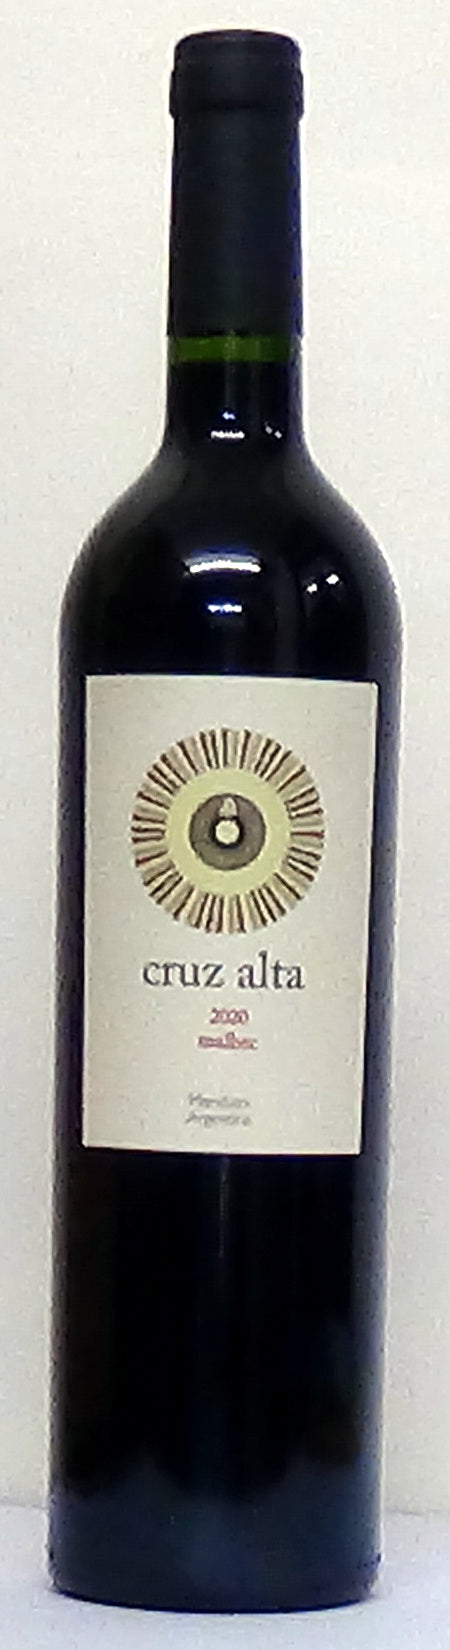 Cruz Alta Malbec Mendoza Argentina - Red Wines - Argentinian Wines - W